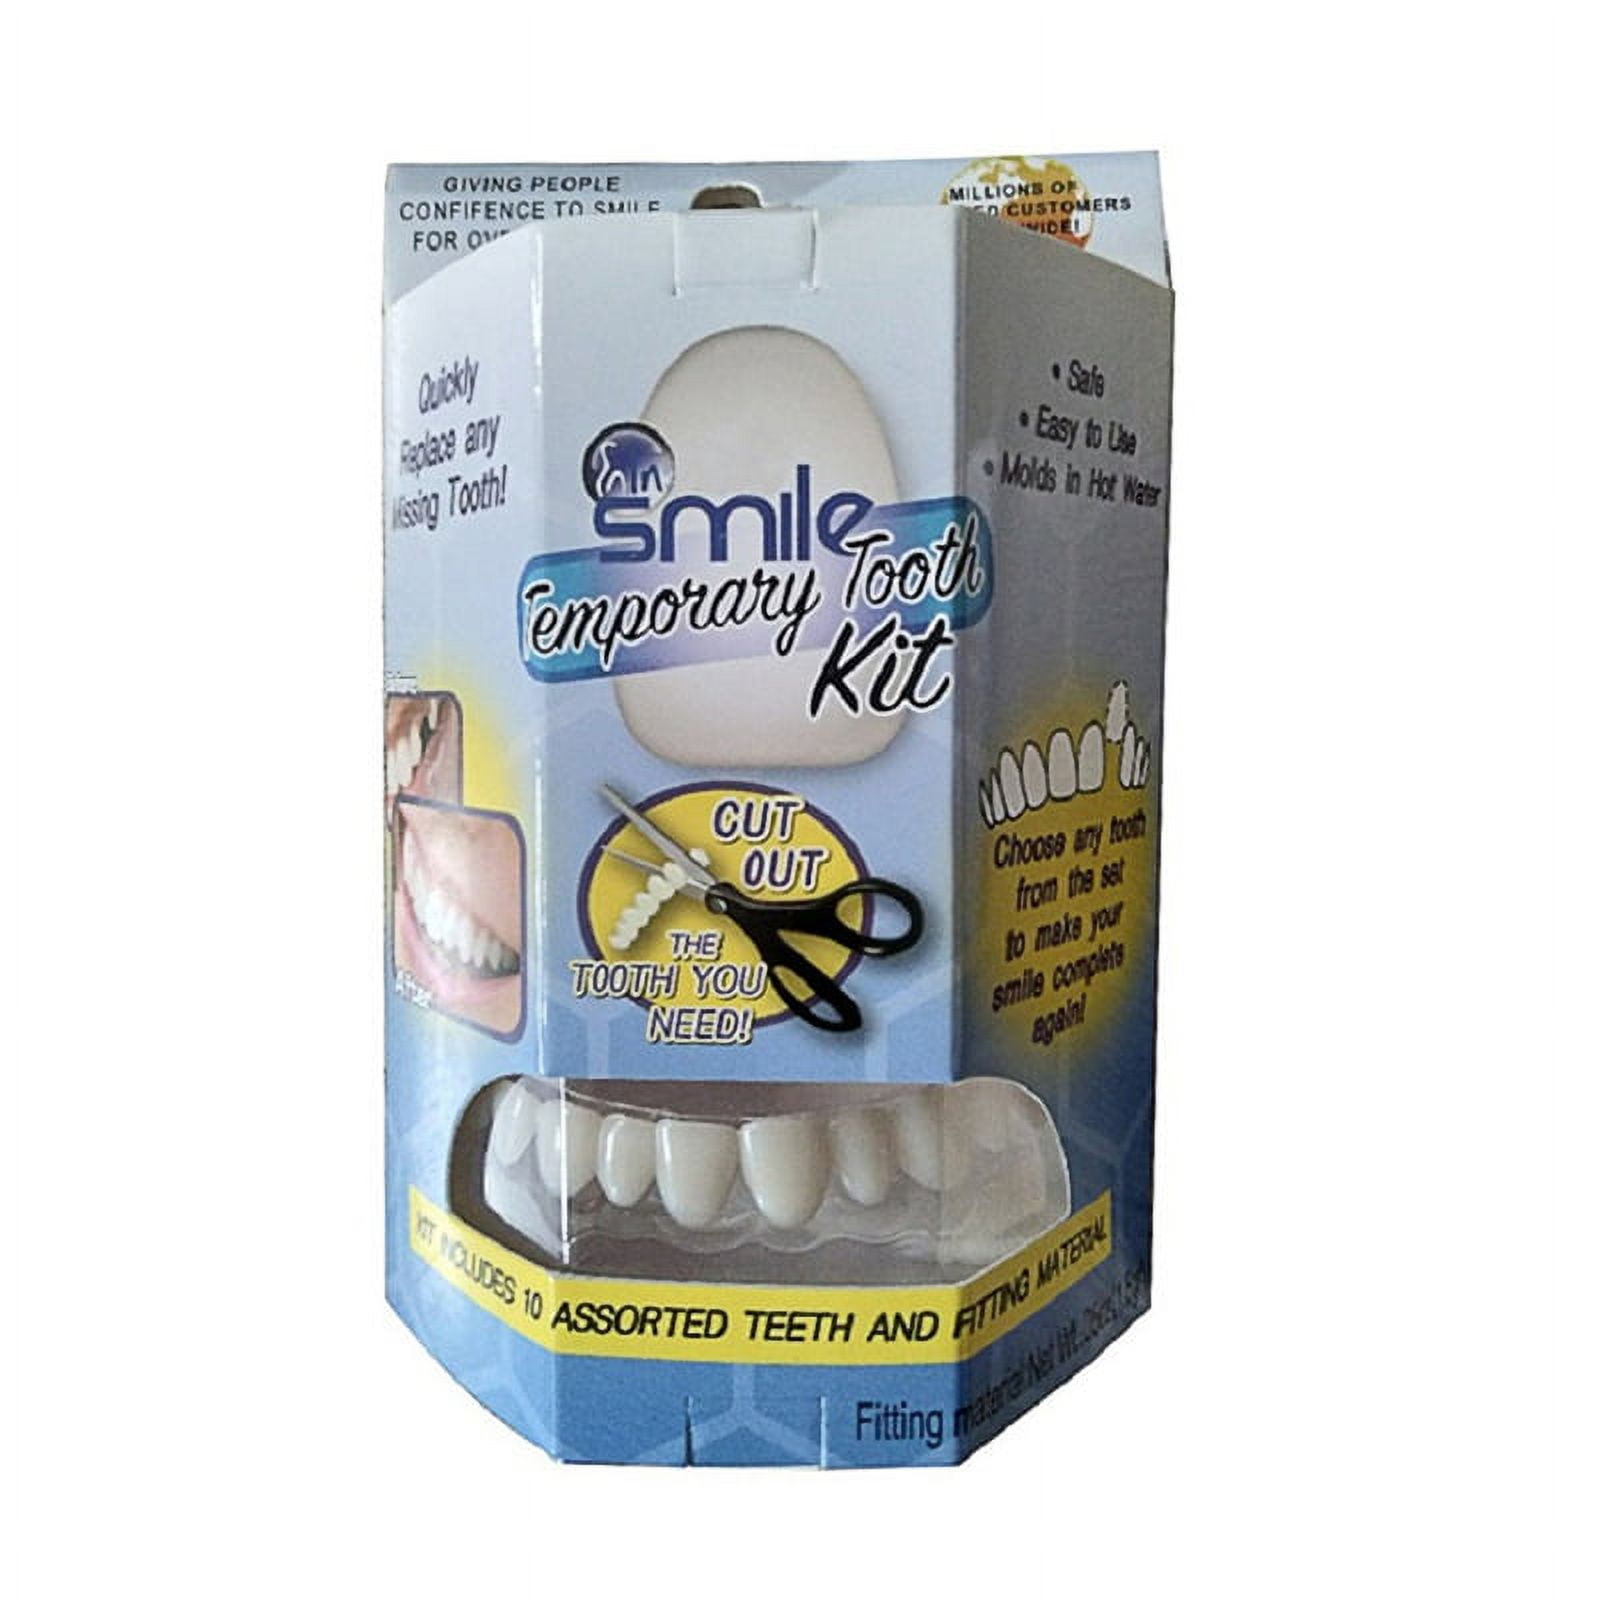 $4/mo - Finance Teeth Repair Kit, Temporary Teeth replacement kit